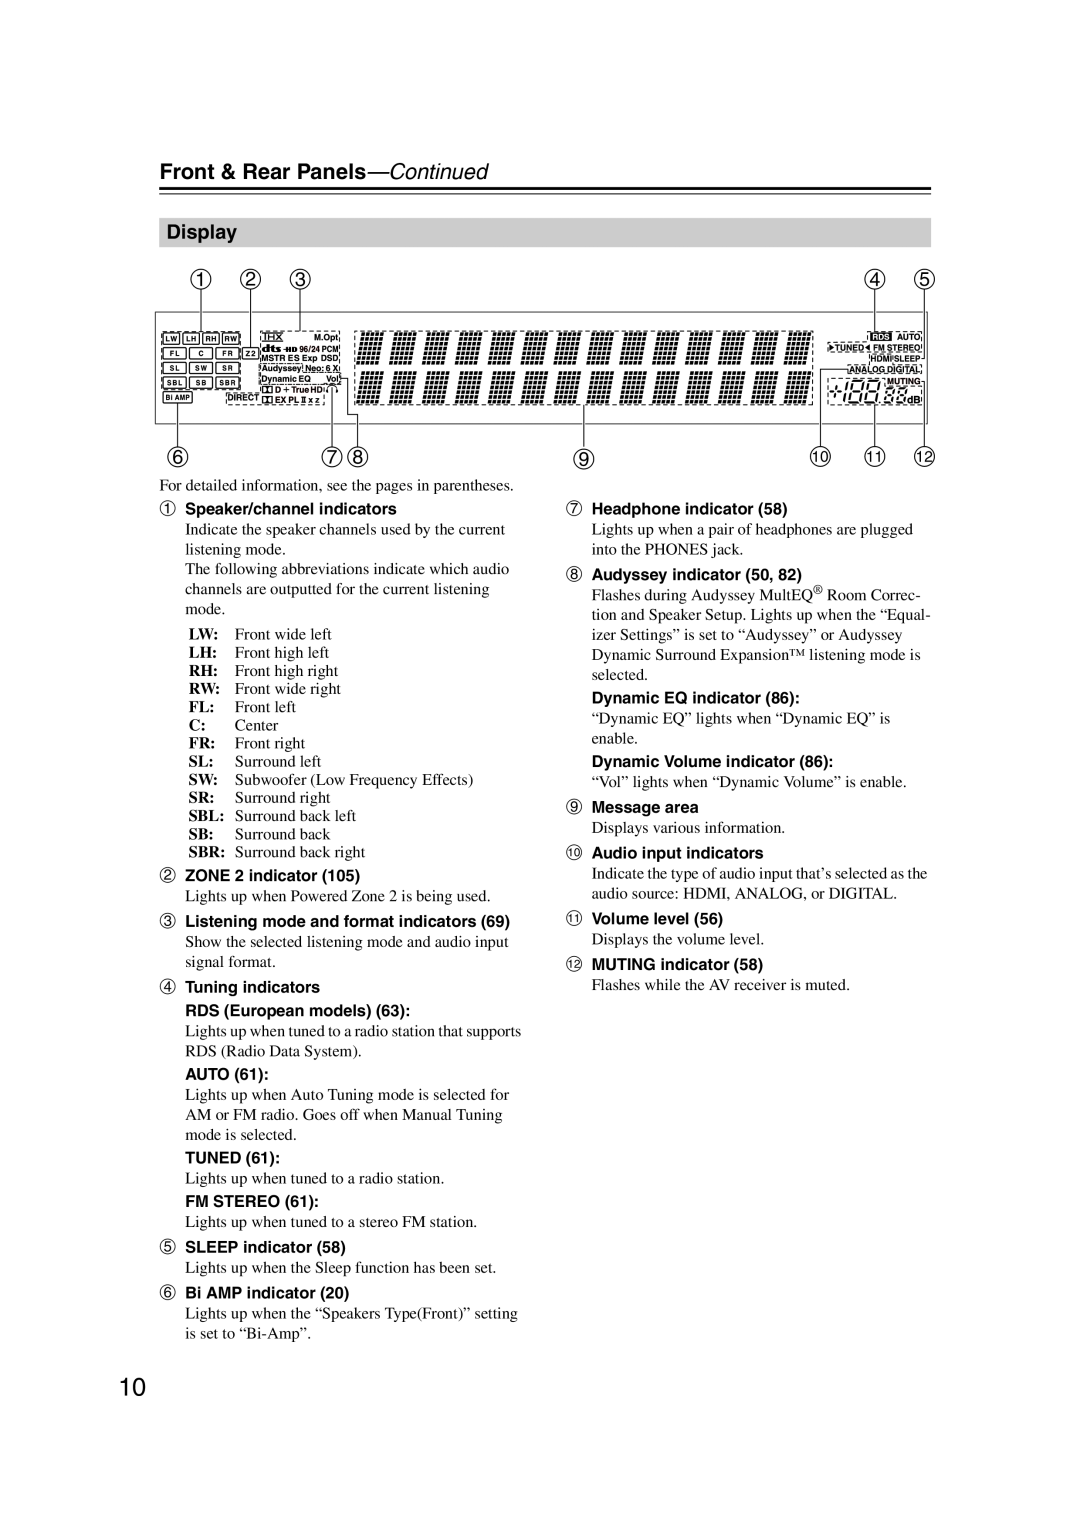 Onkyo TX-SR707 instruction manual a b c, ij k l, Display, Front & Rear Panels—Continued 